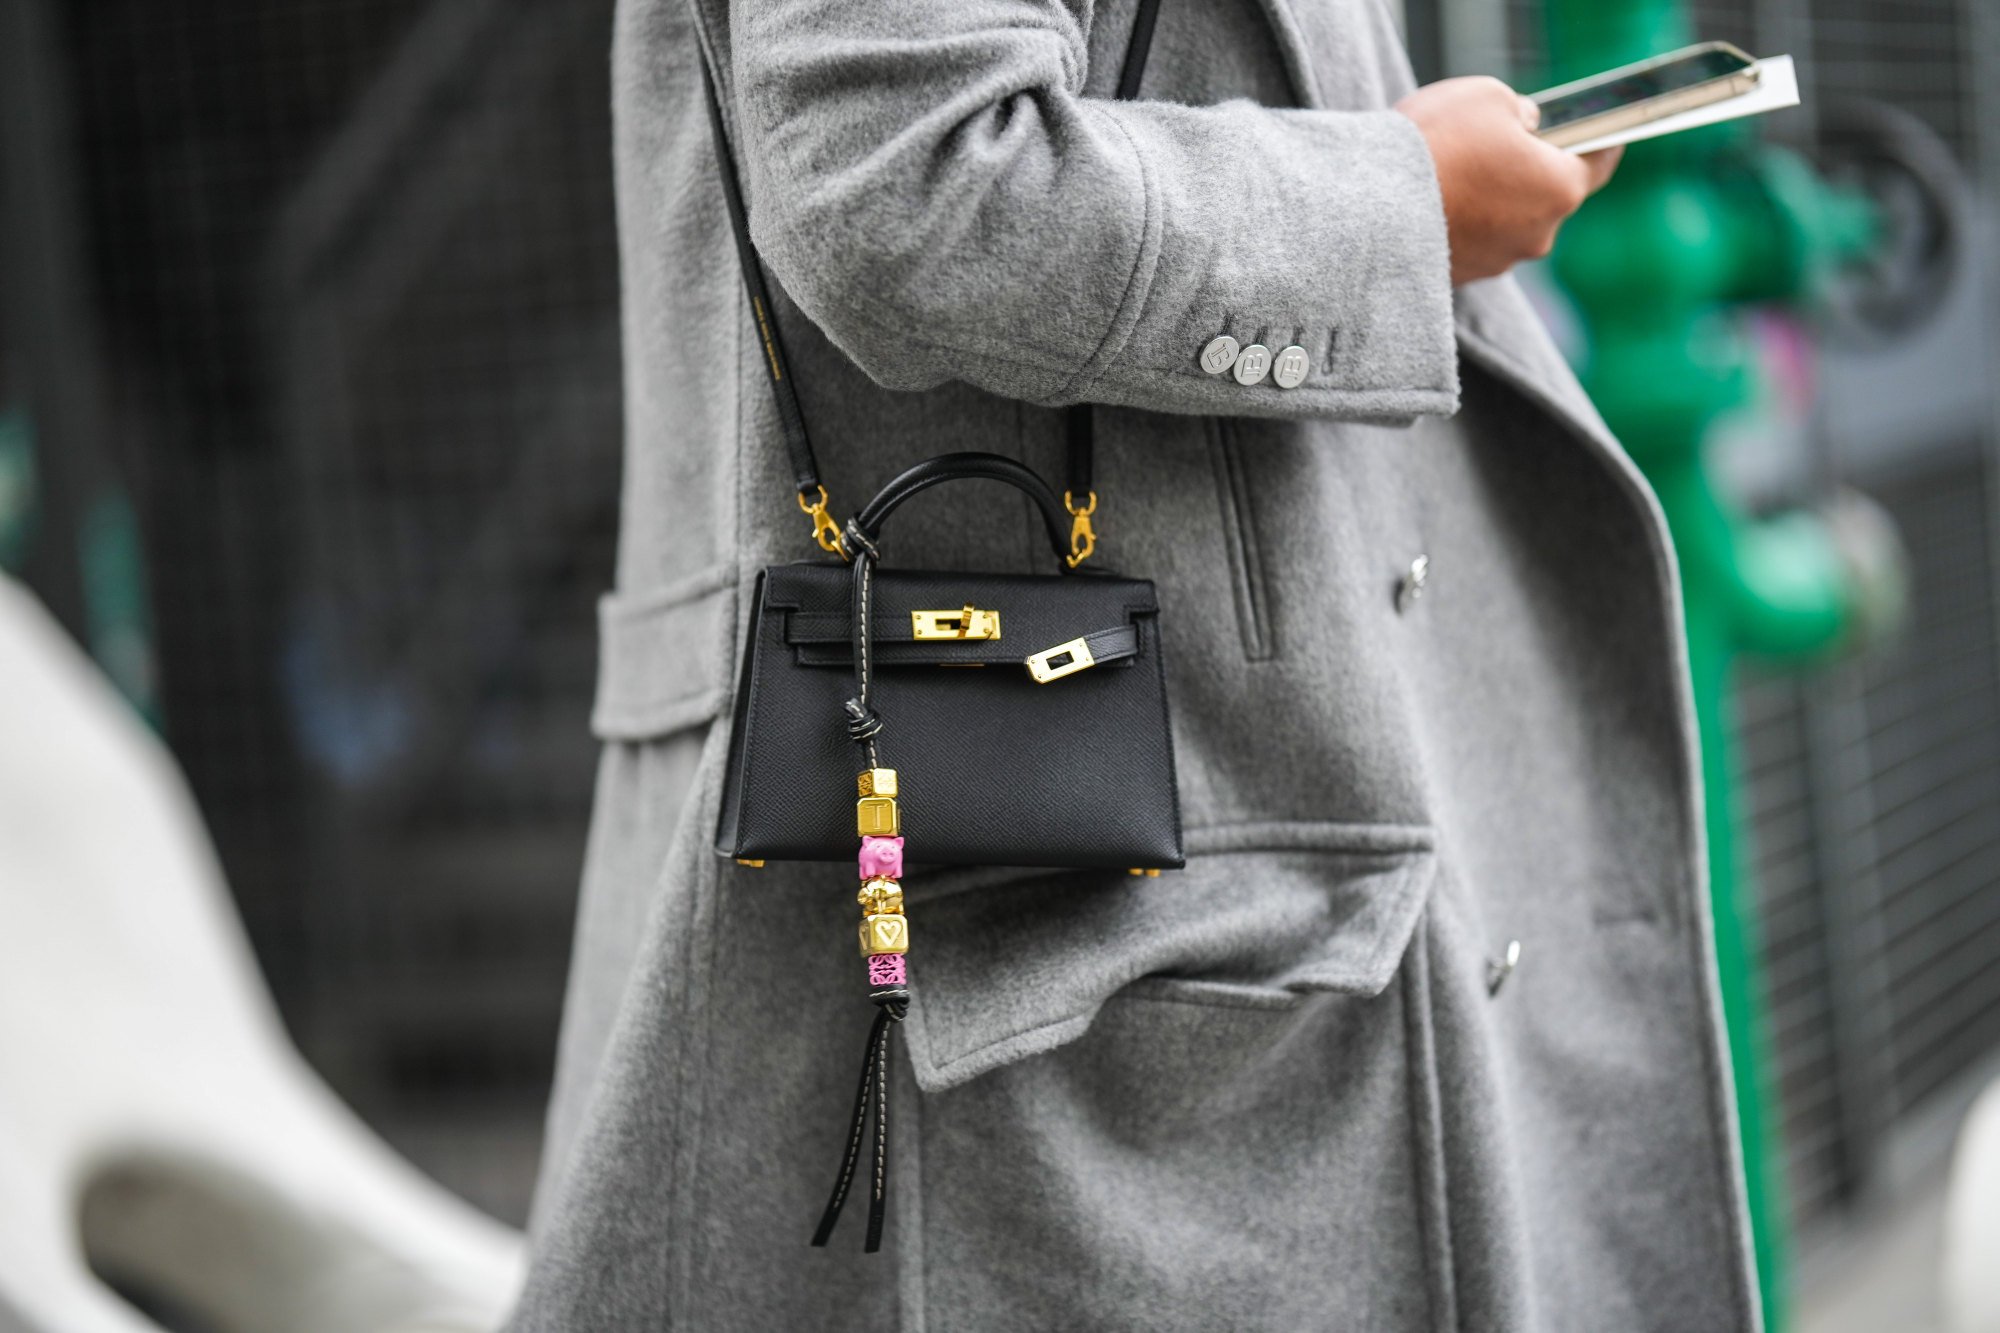 Tiny handbags, Gen Z consumers propel global luxury sales to new heights